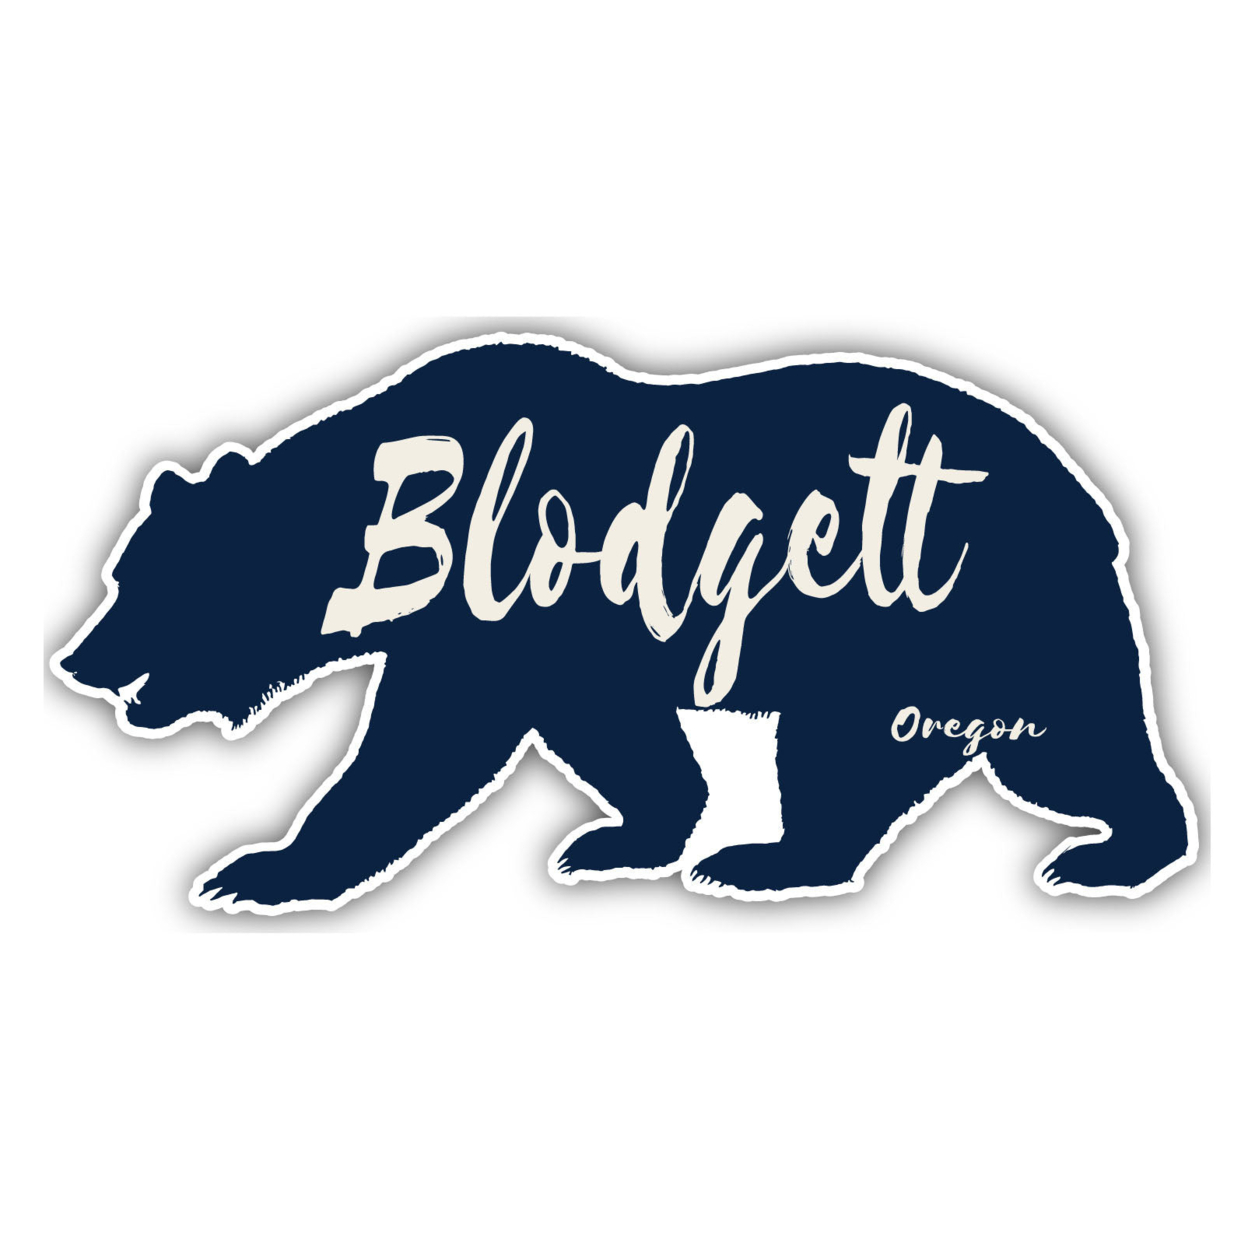 Blodgett Oregon Souvenir Decorative Stickers (Choose Theme And Size) - Single Unit, 4-Inch, Bear